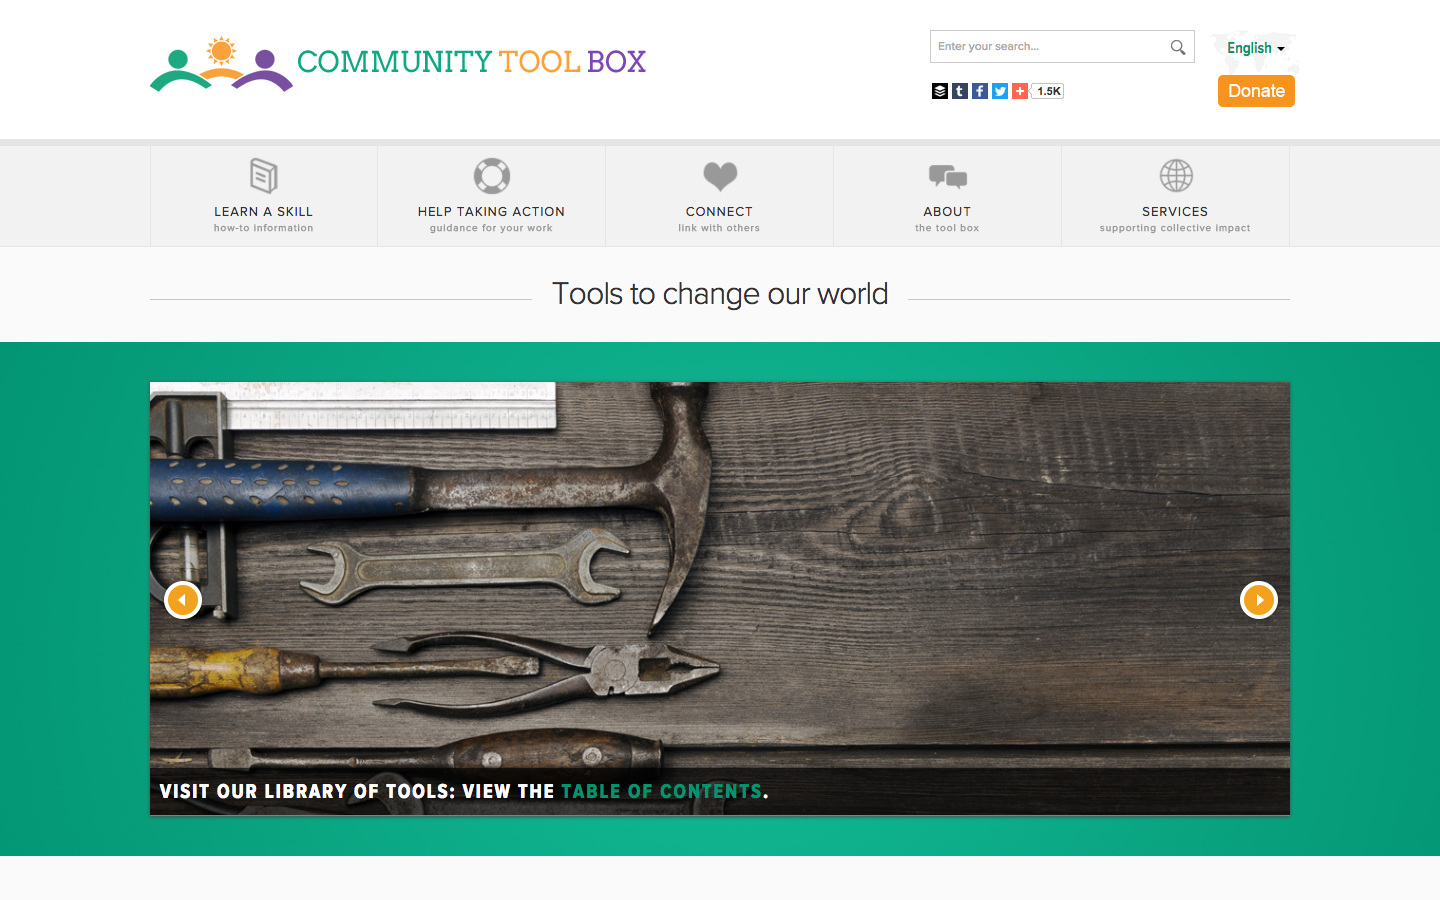 Community Tool Box